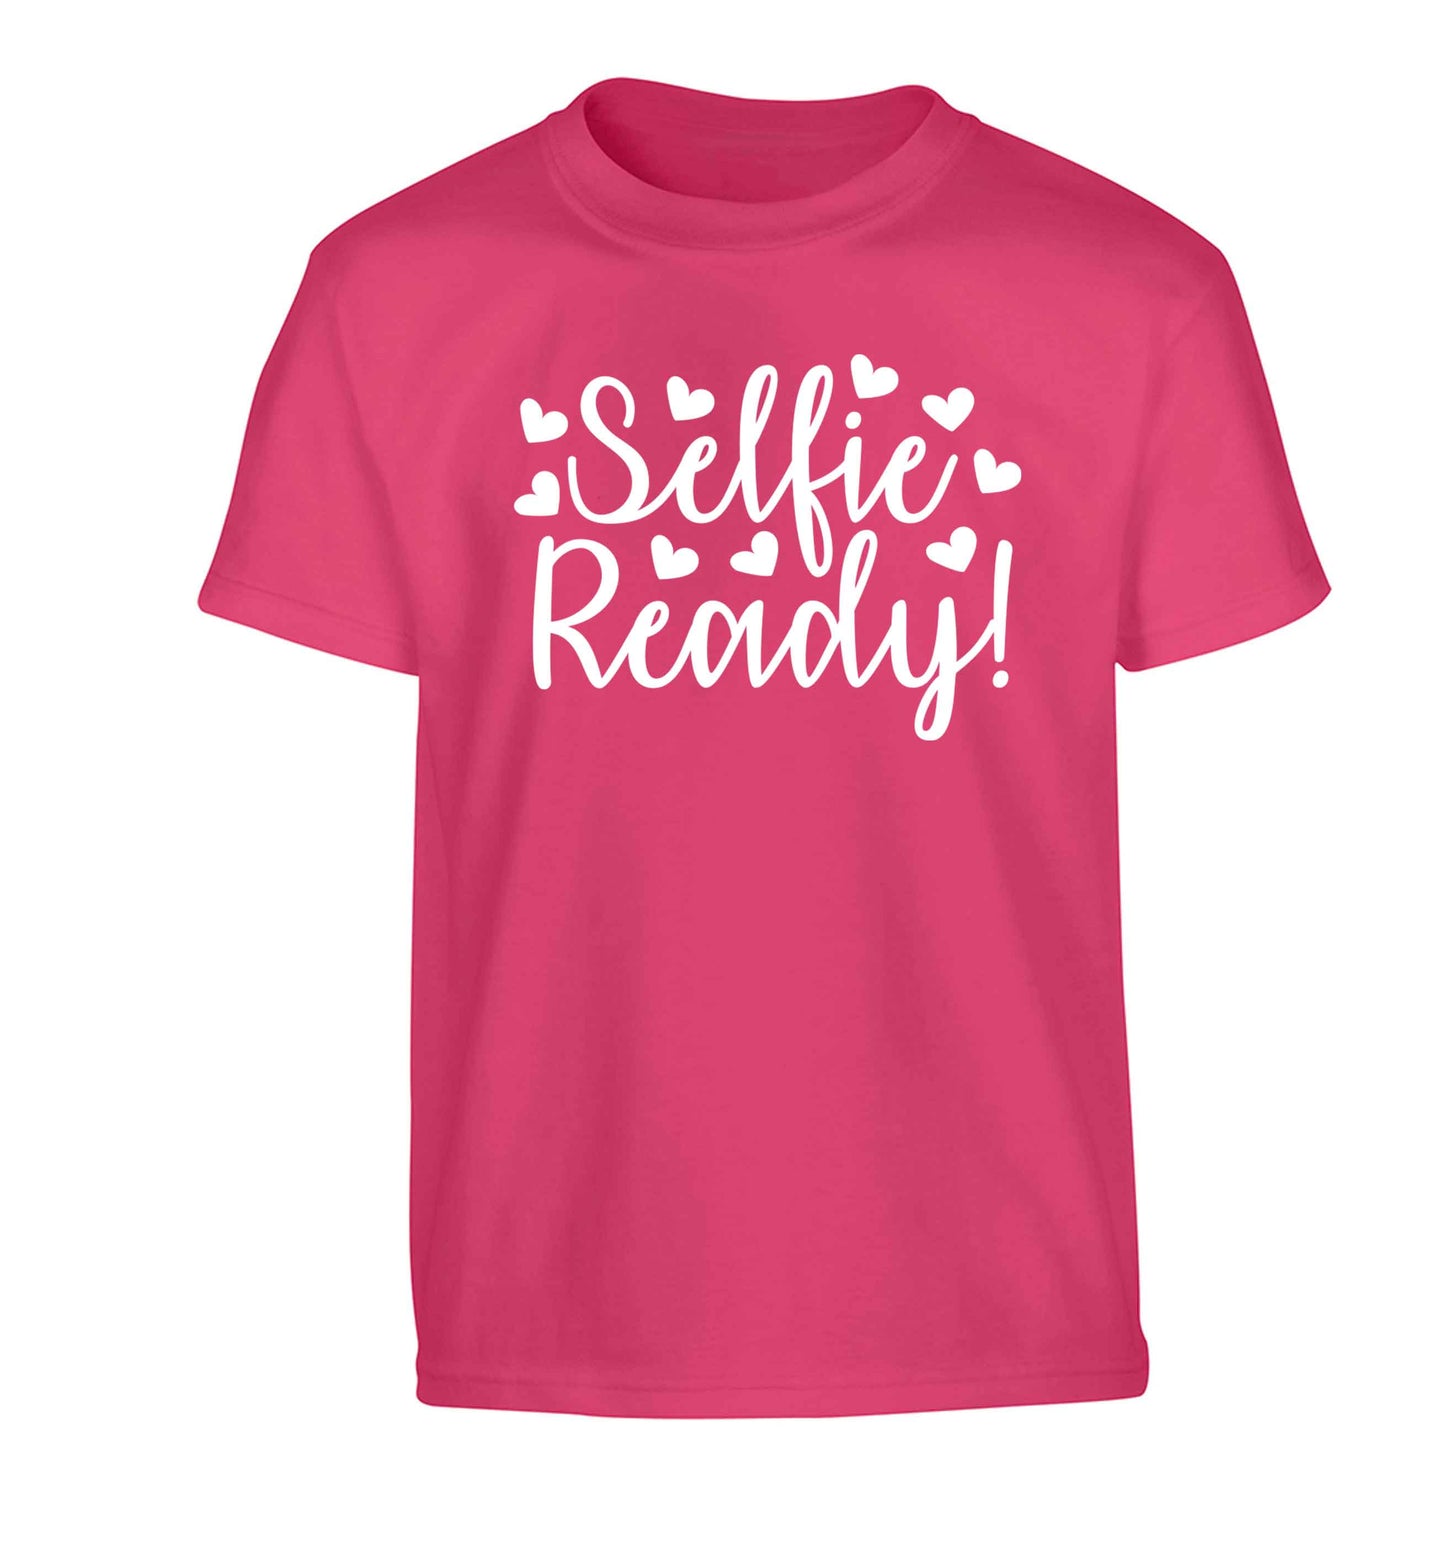 Selfie ready Children's pink Tshirt 12-13 Years